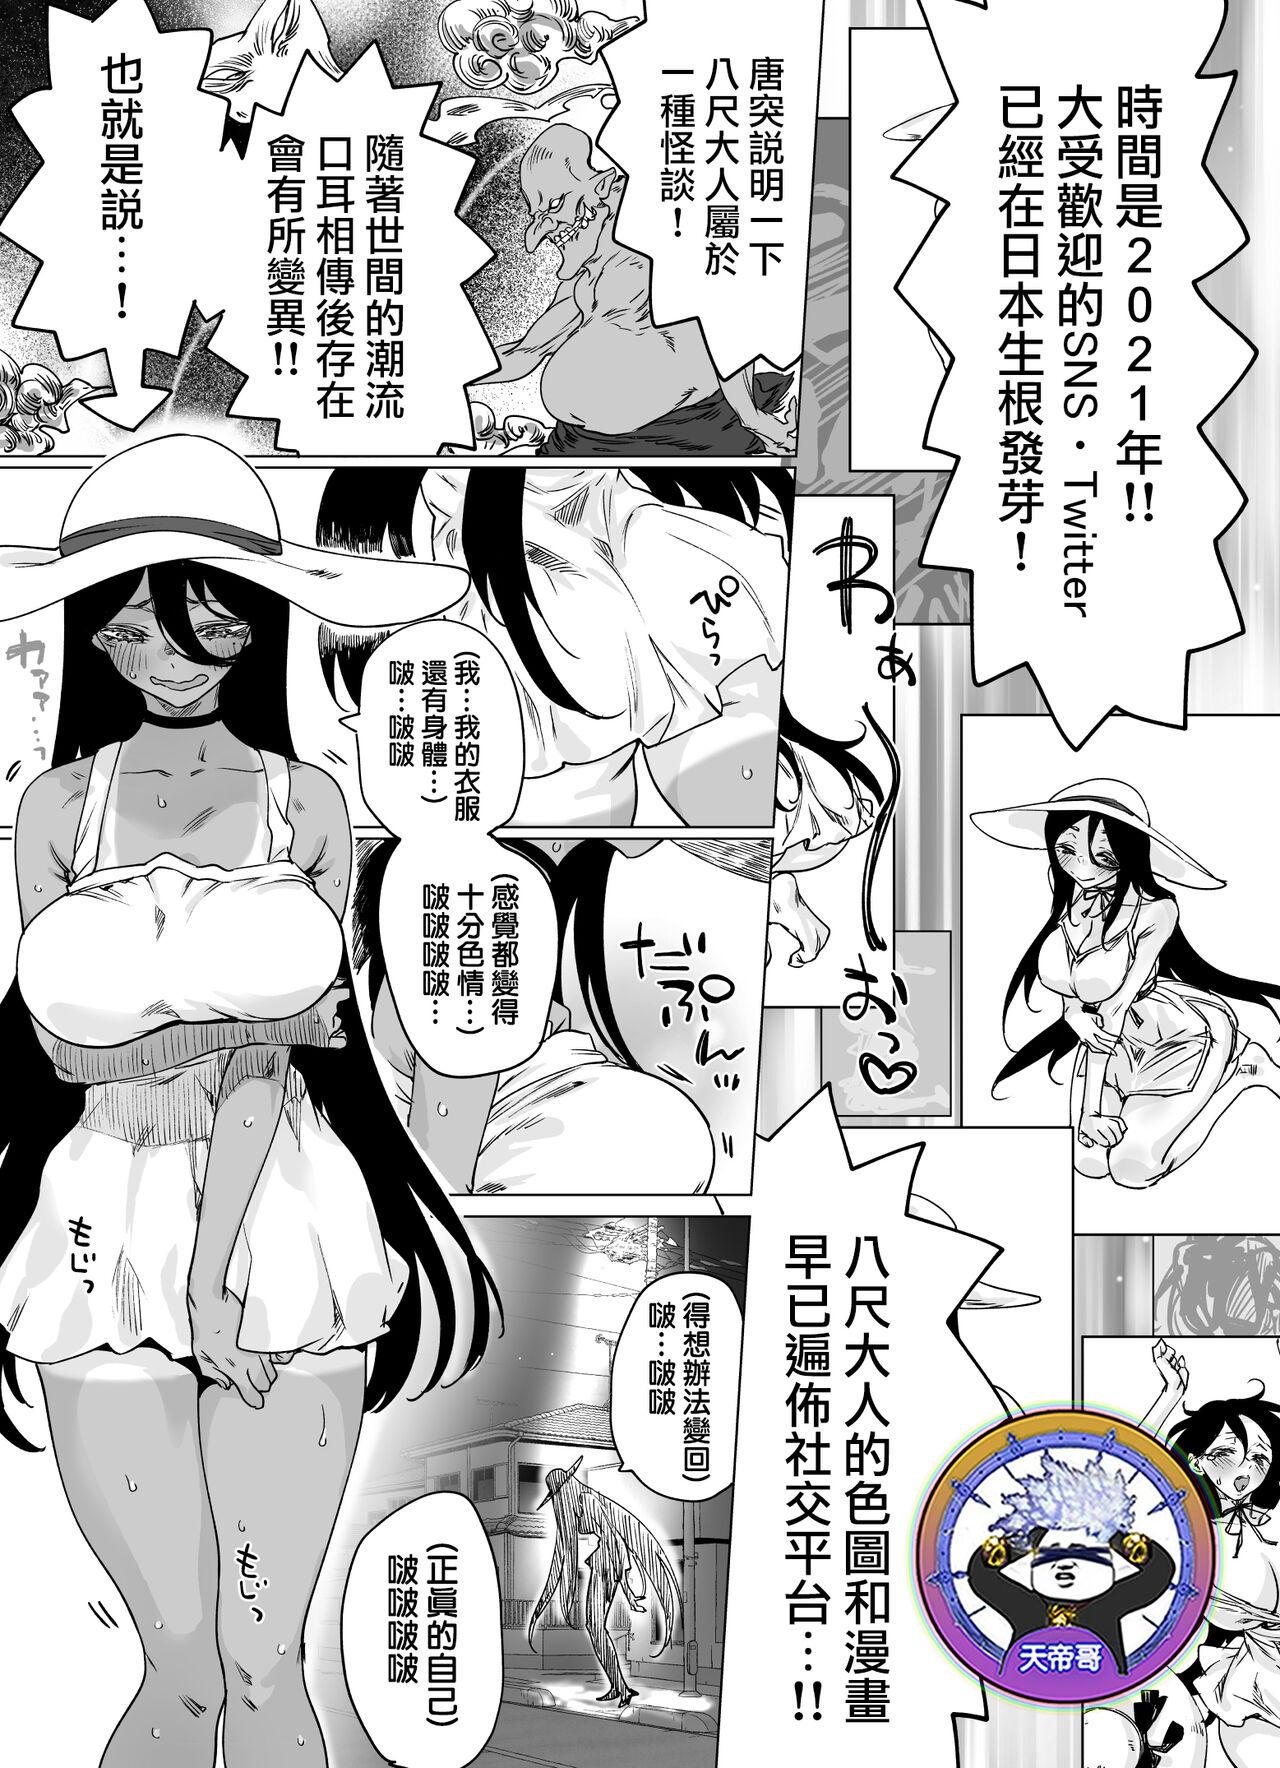 Hachishaku-sama Became Cutely Erotic When Buzzed | 有多火就會變得有多可愛的八尺大人 0